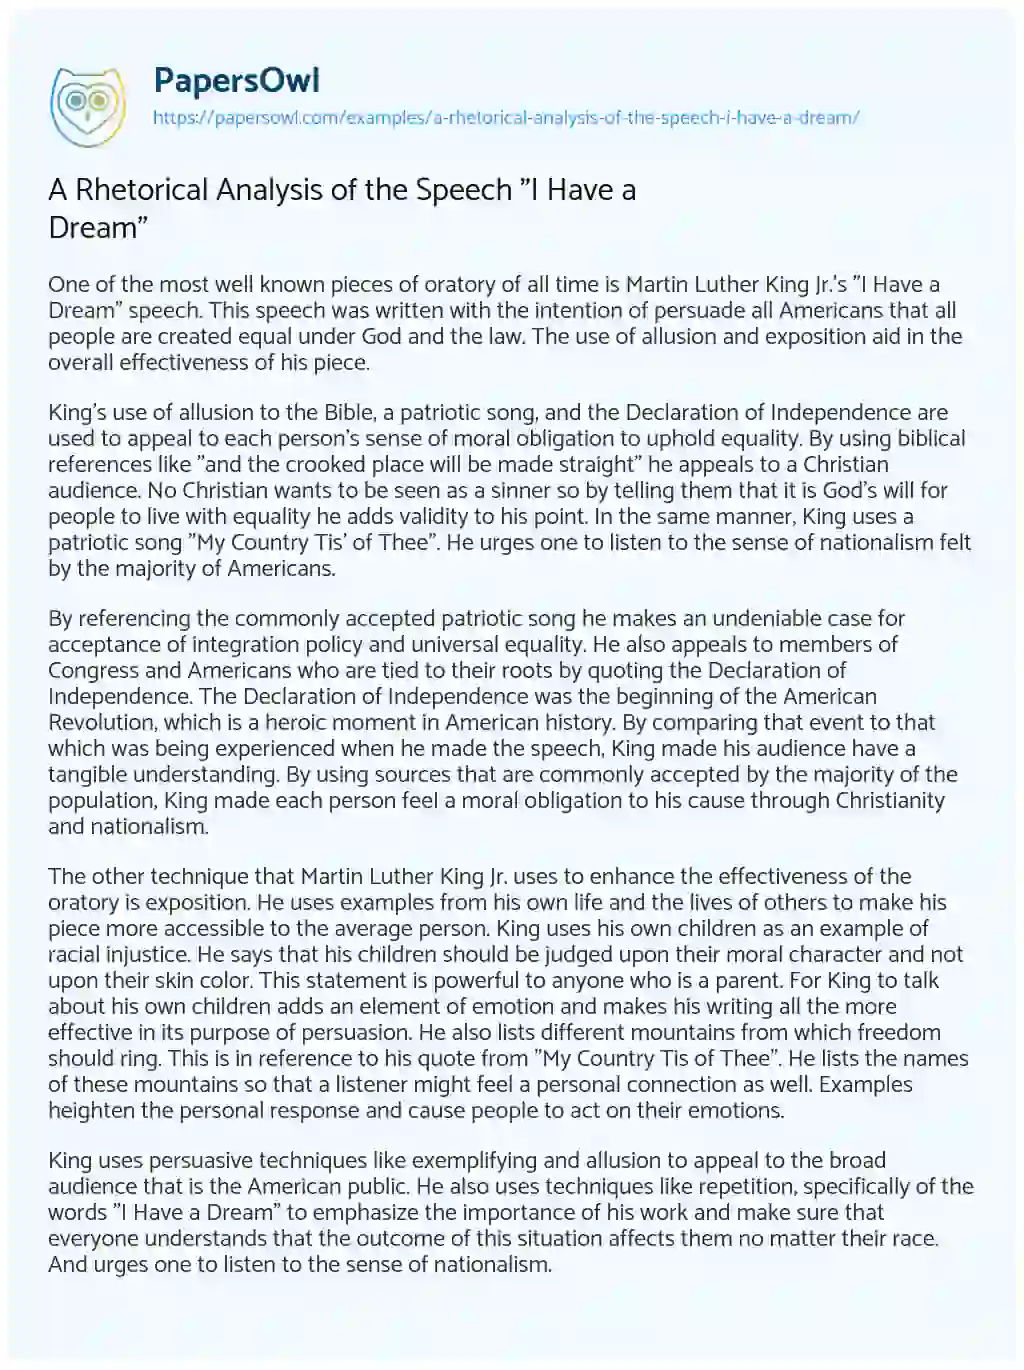 Essay on A Rhetorical Analysis of the Speech “I have a Dream”